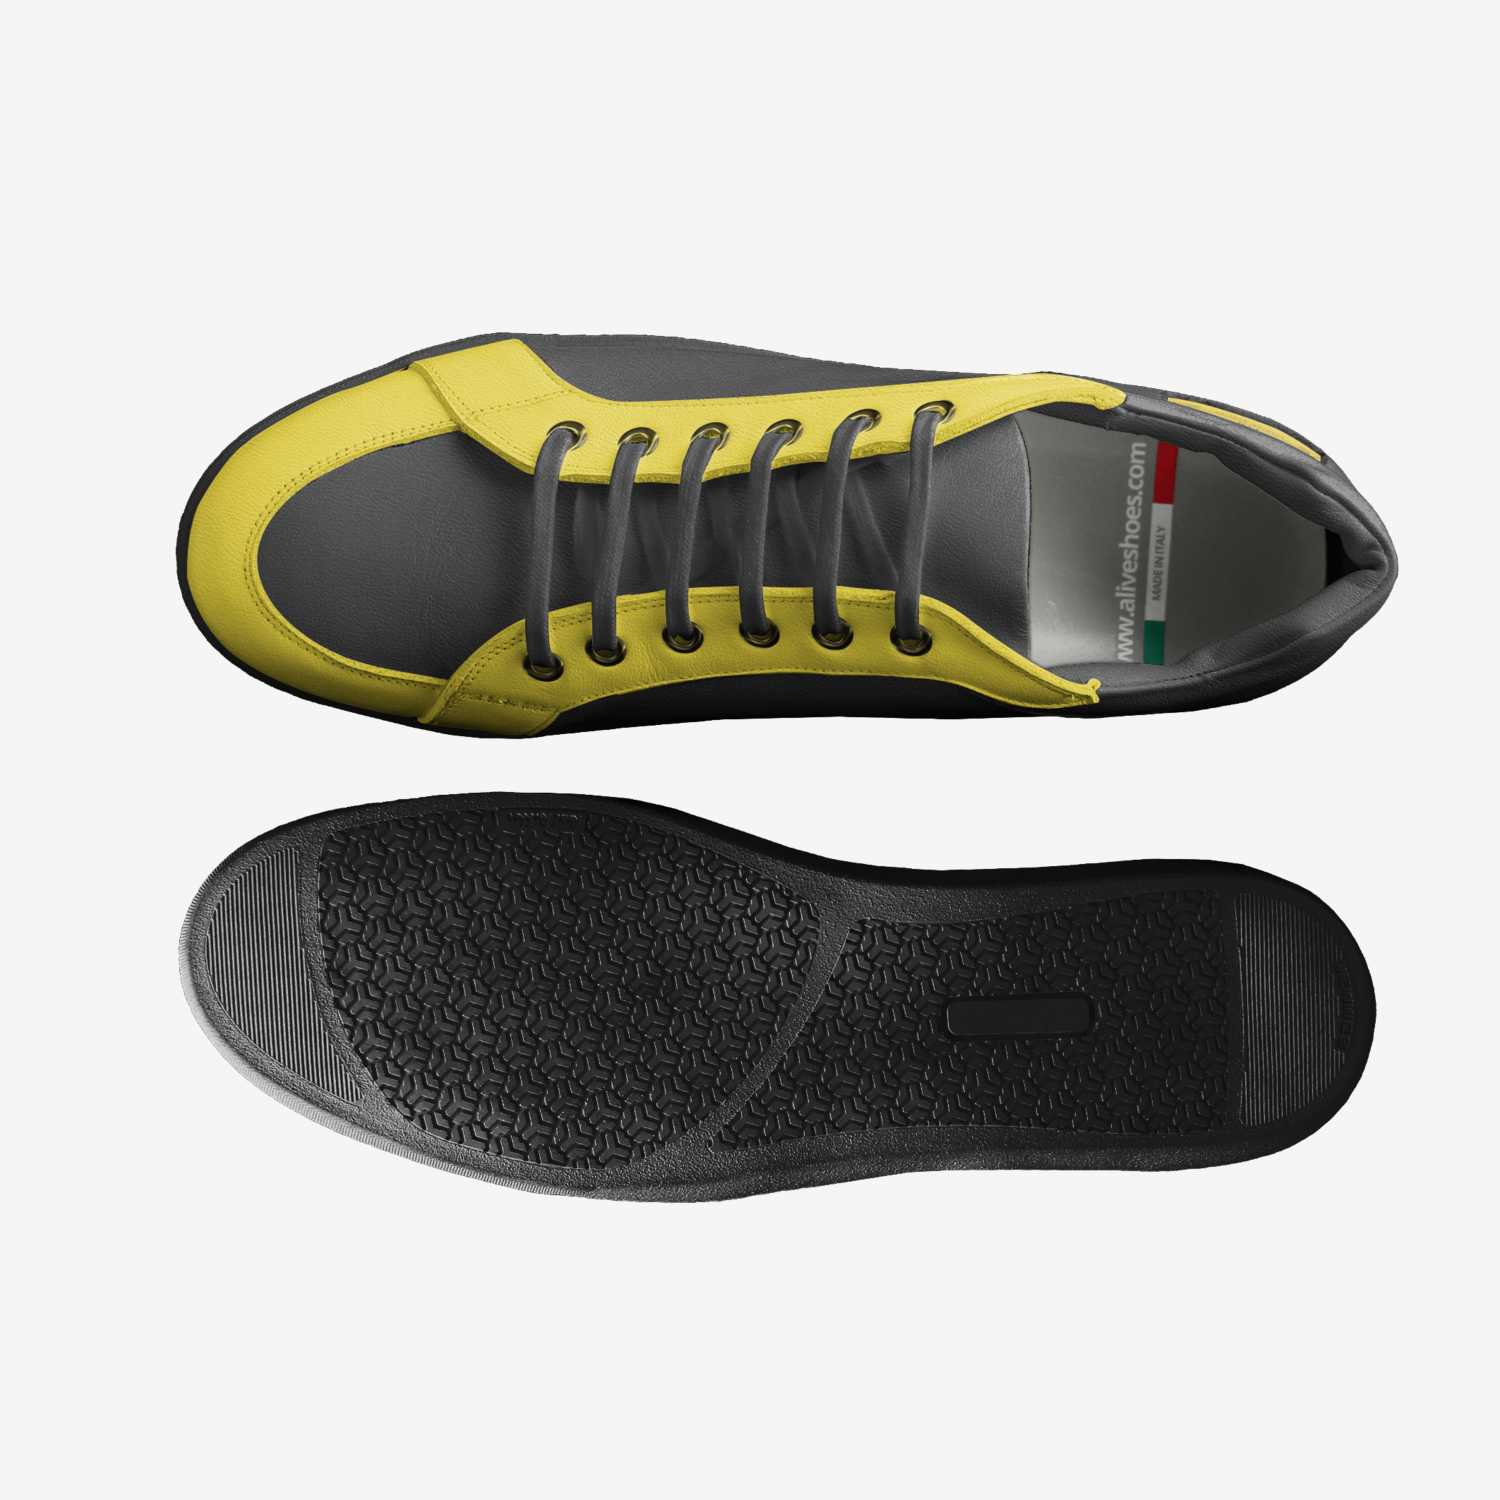 2010 Nike Zoom Hyperfuse - Prototype sketches - Nike presents, Nike  basketball, Design